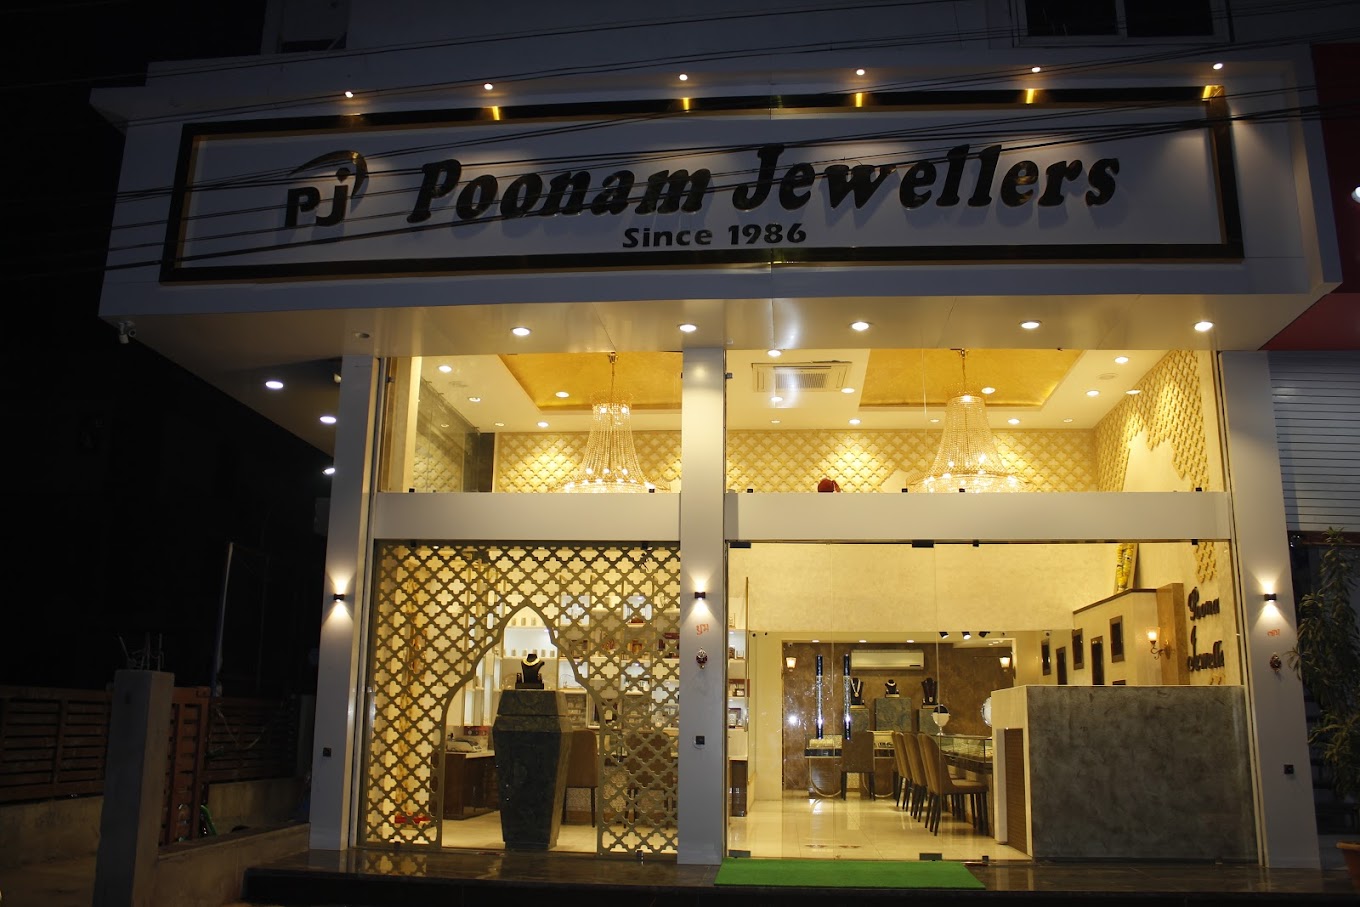 Poonam Jewellers